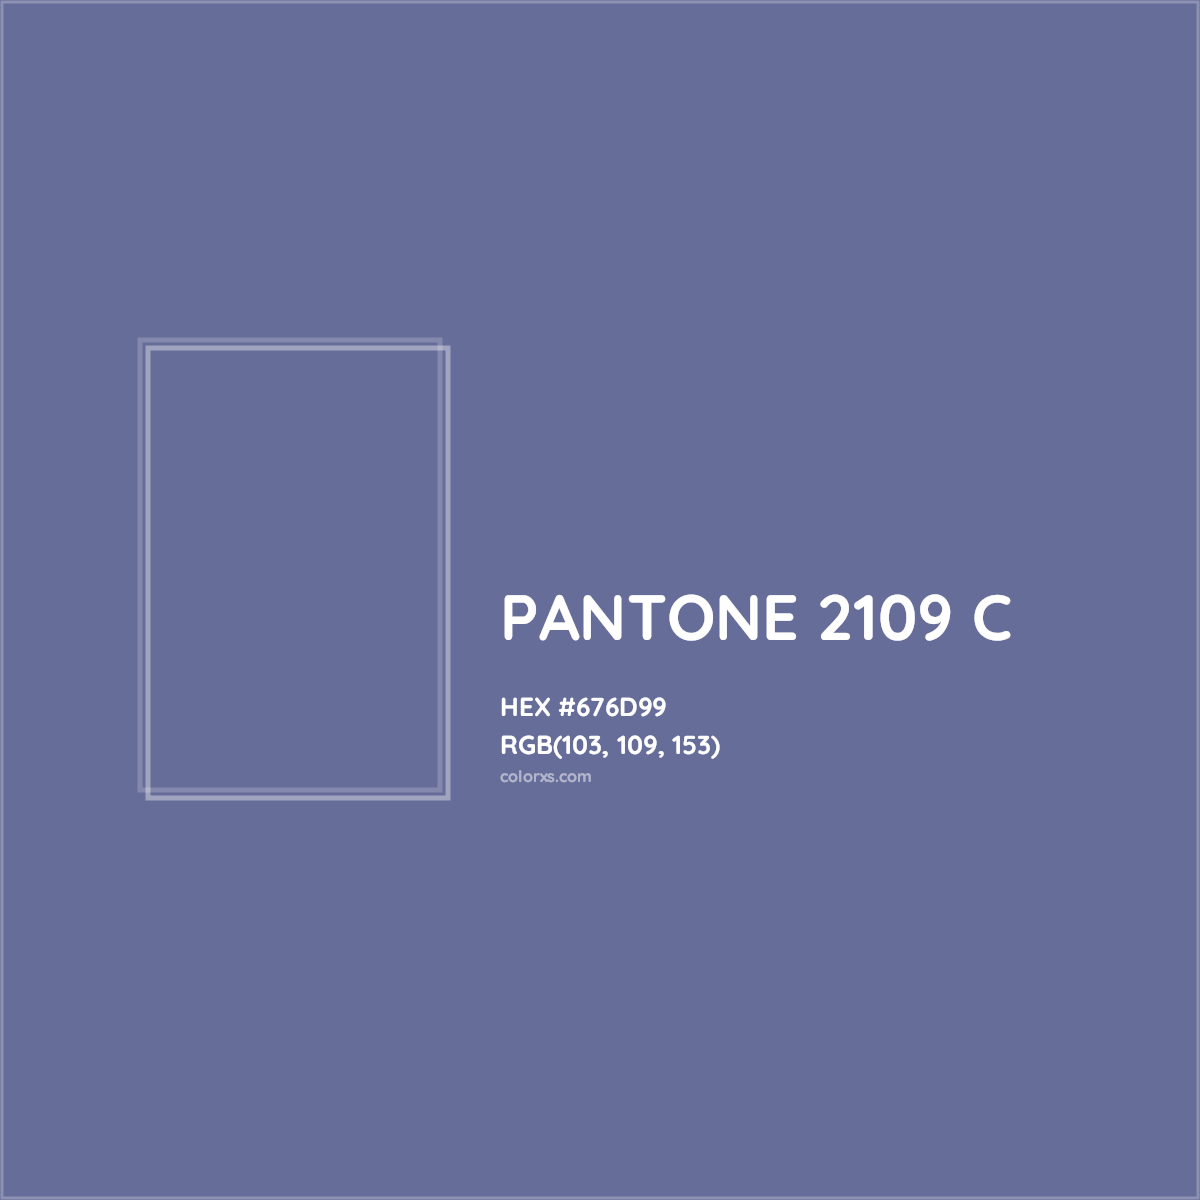 HEX #676D99 PANTONE 2109 C CMS Pantone PMS - Color Code